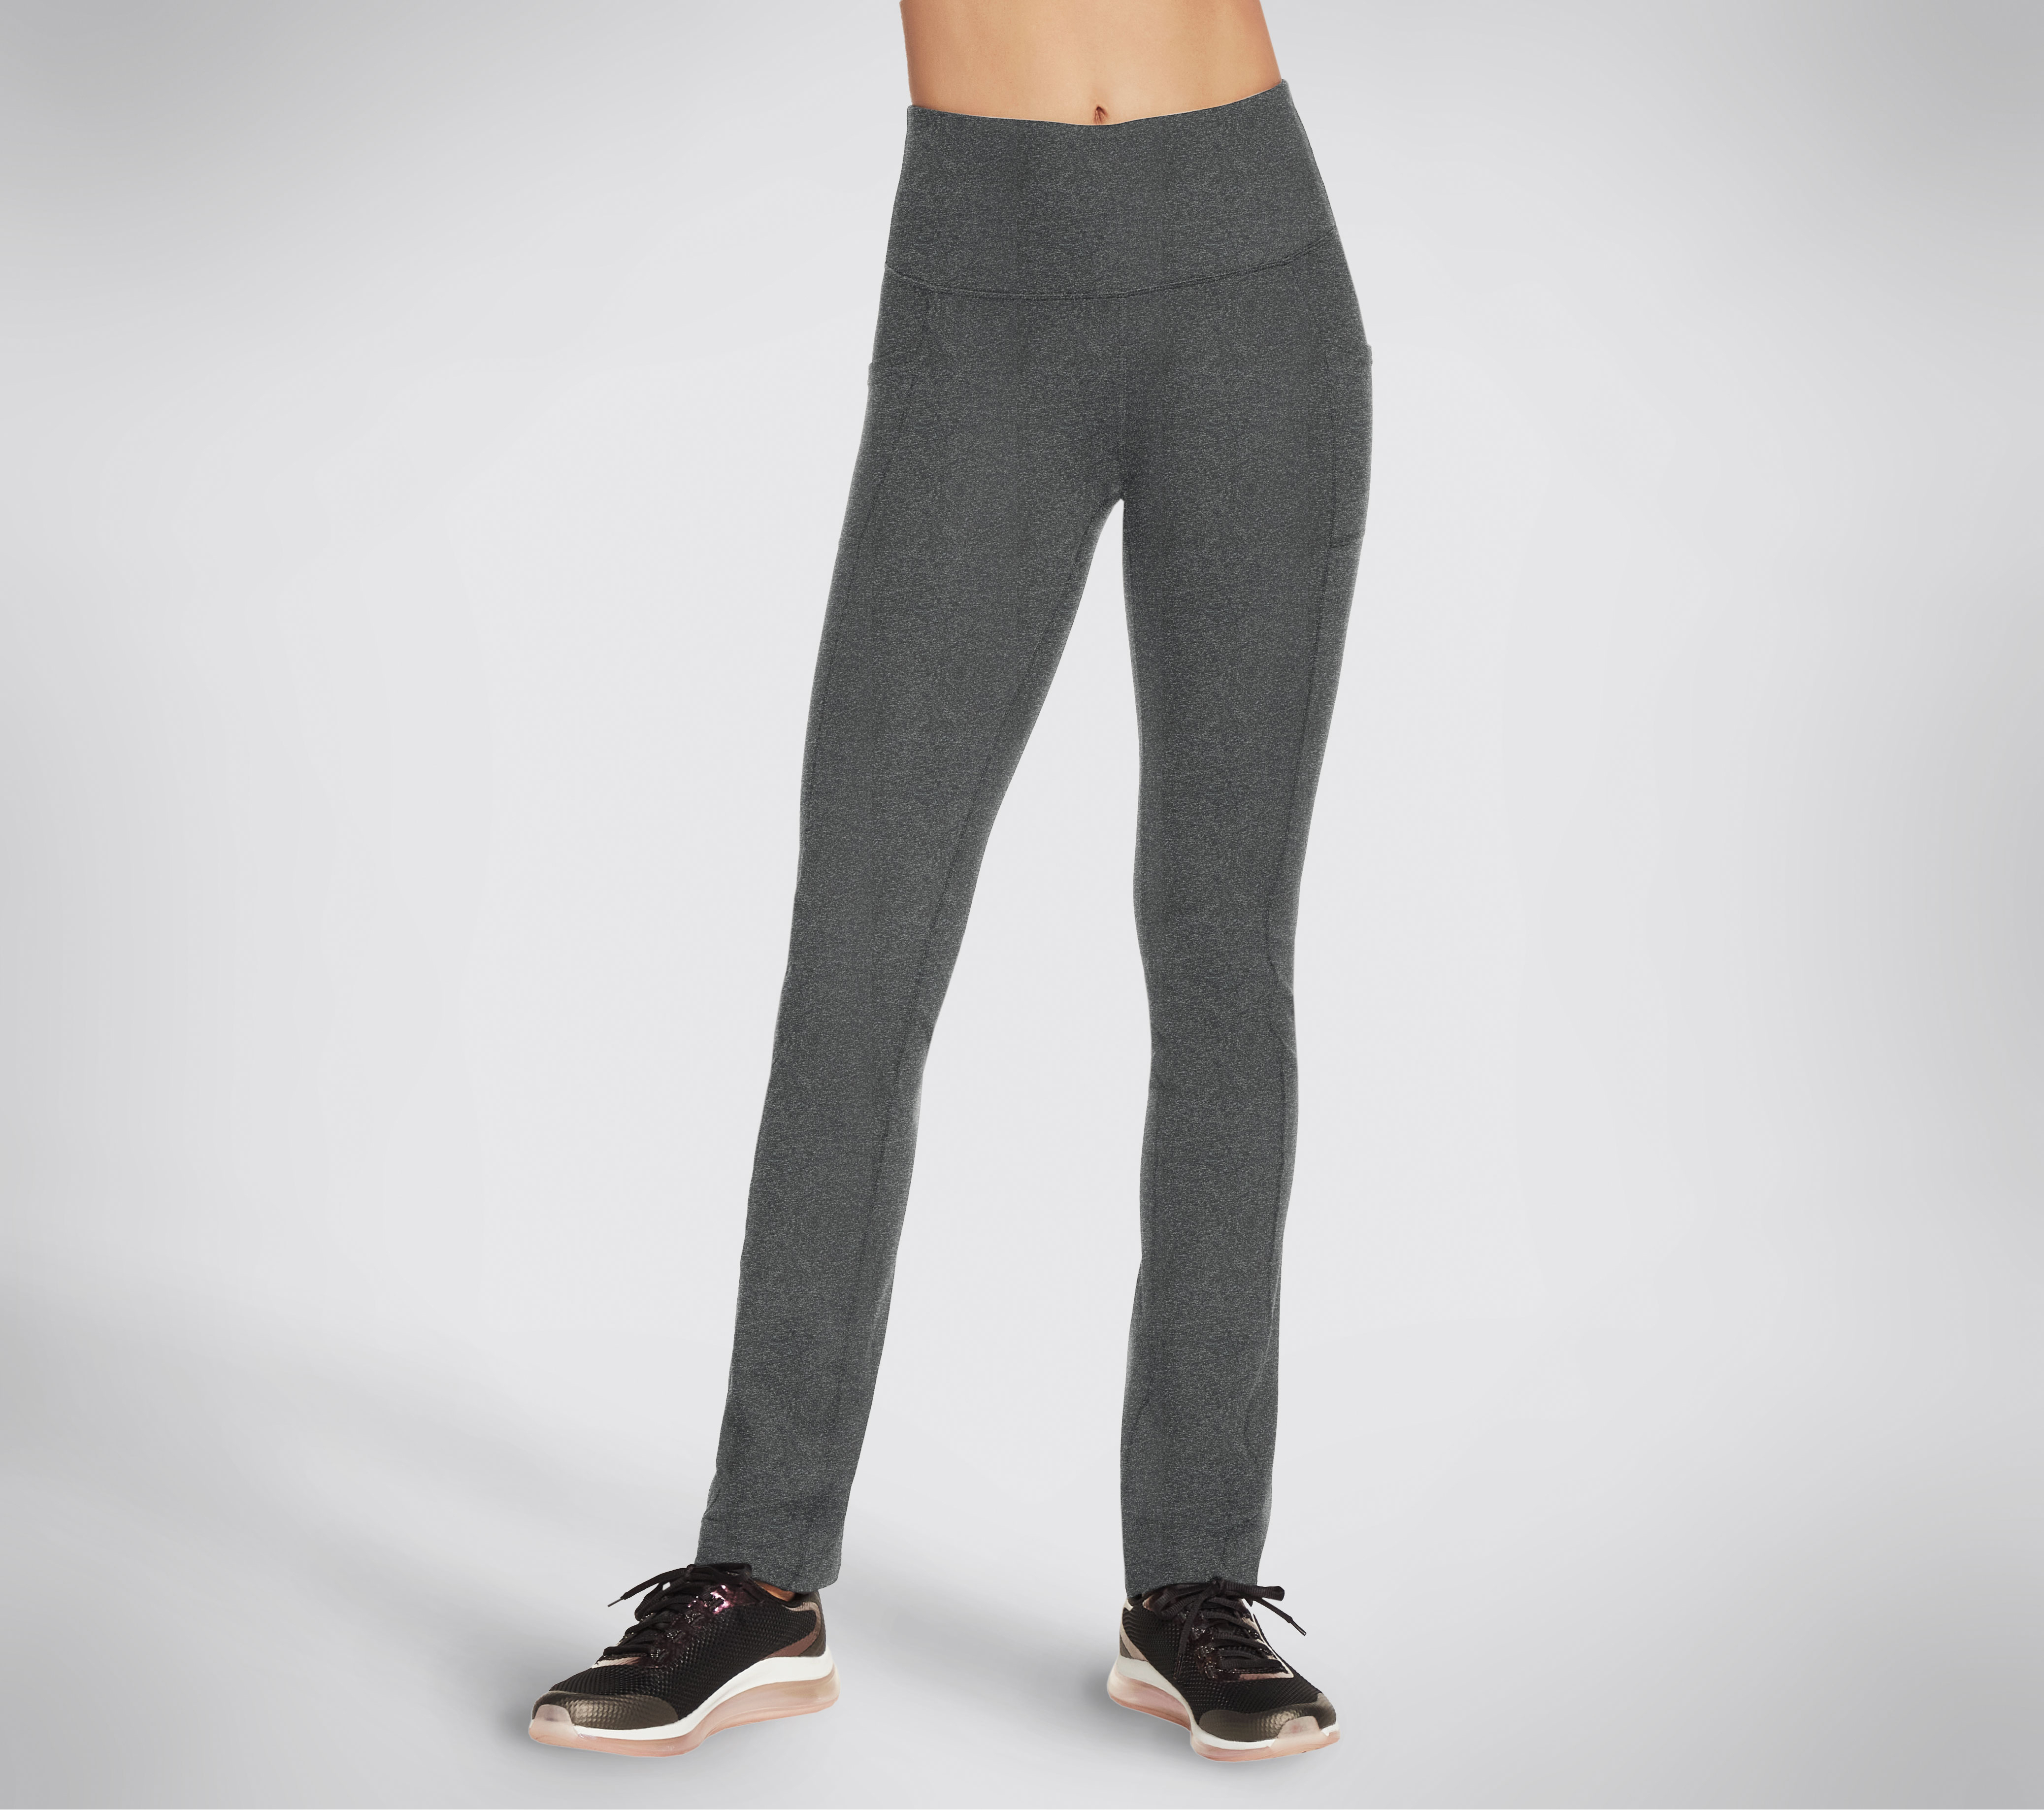 Skechers Women's GO WALK Joy Pants Tall Length Size XS Gray Nylon/Spandex